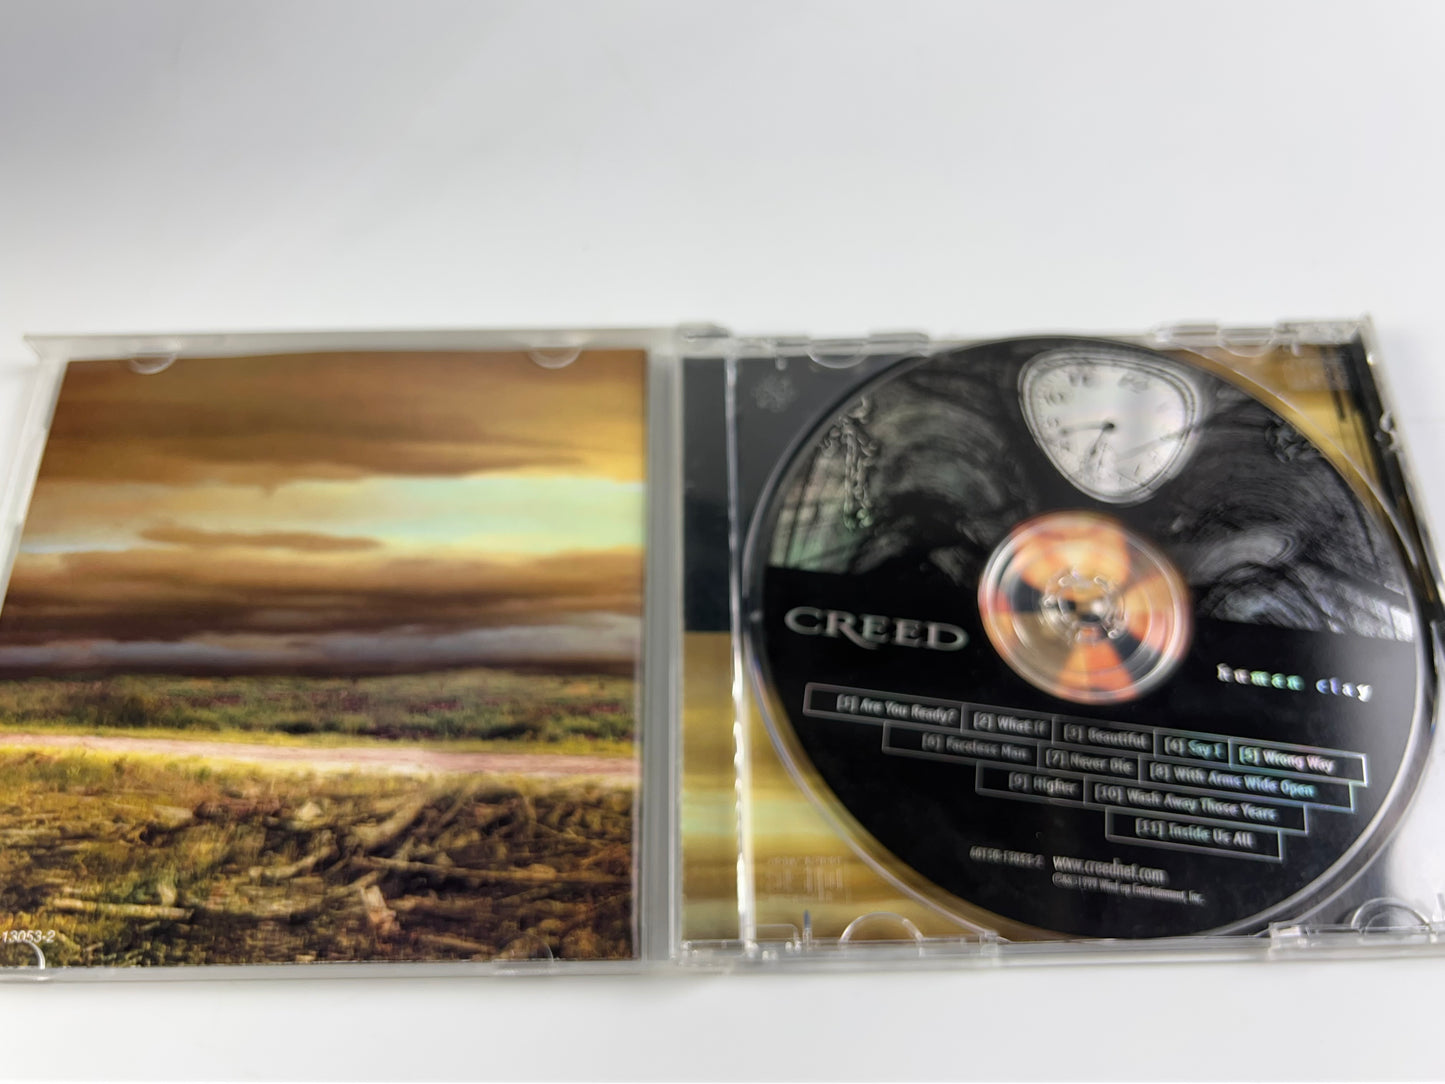 Human Clay by Creed (CD, 2012)